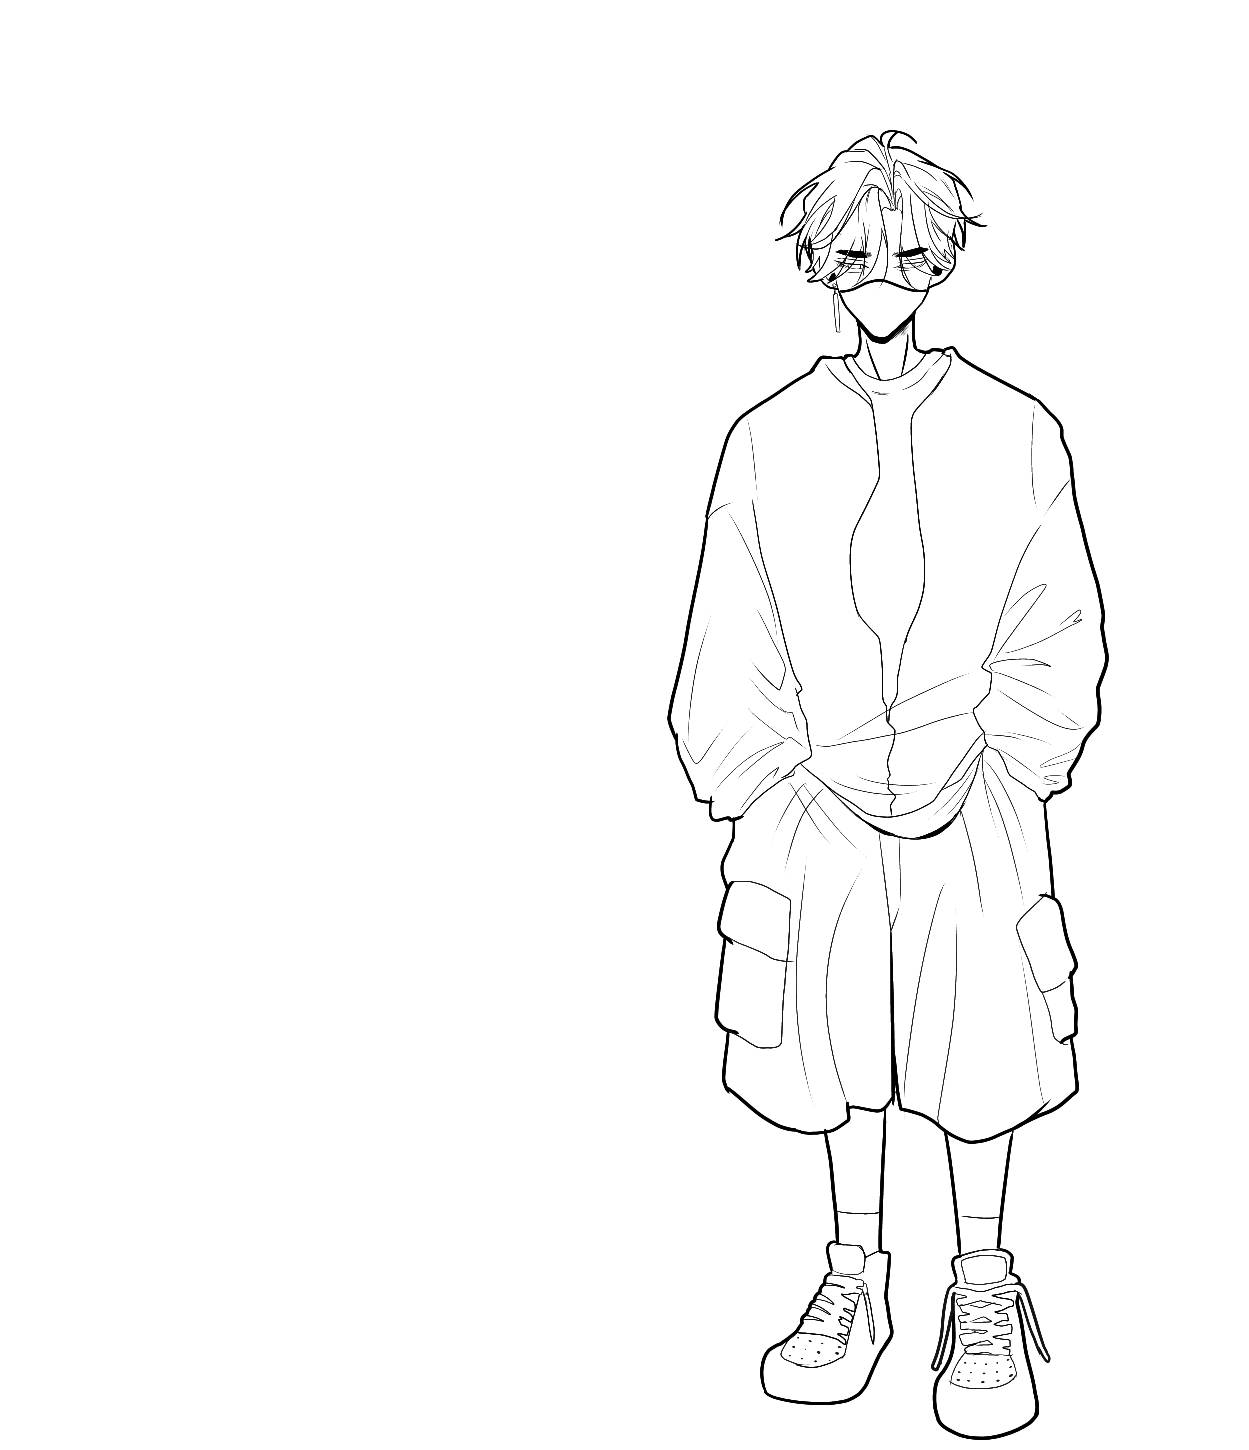 F2U] Anime Boy Multiple Poses Base // Line Art by JellieAdopts on DeviantArt